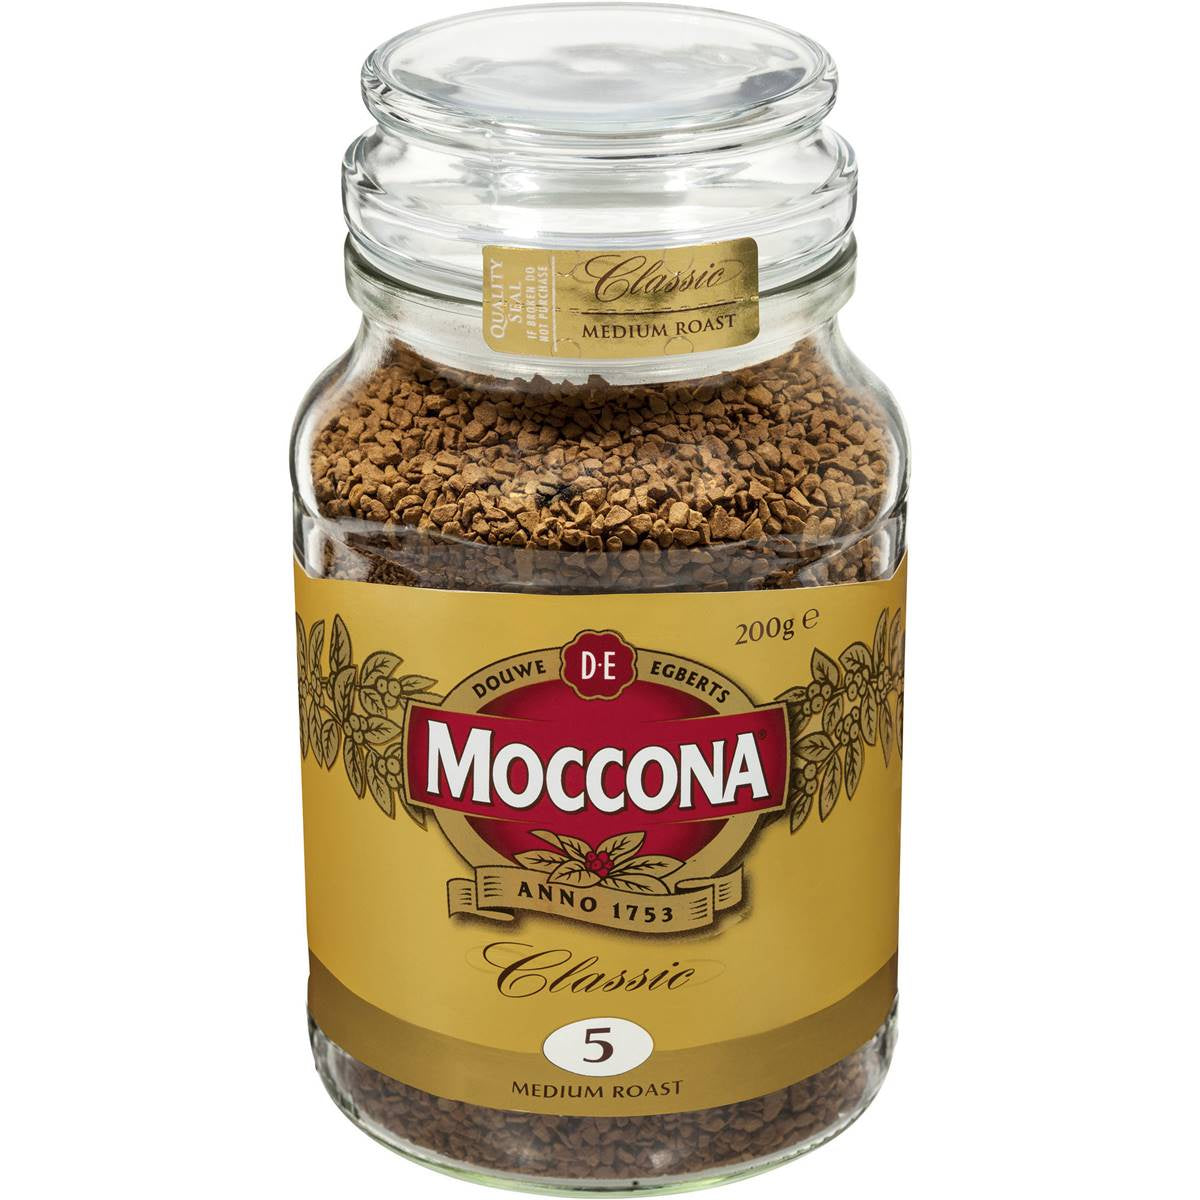 Moccona Classic Medium Roast Instant Coffee 200g